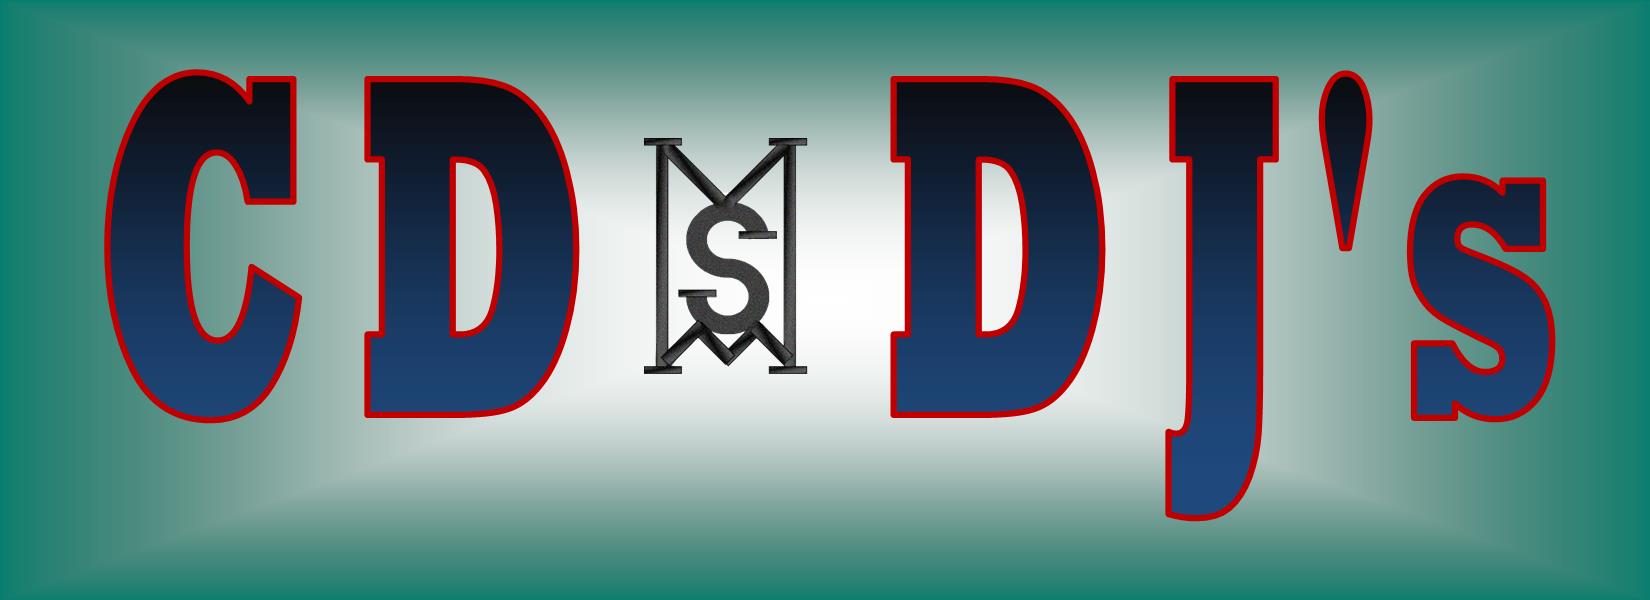 CDDJ's Logo